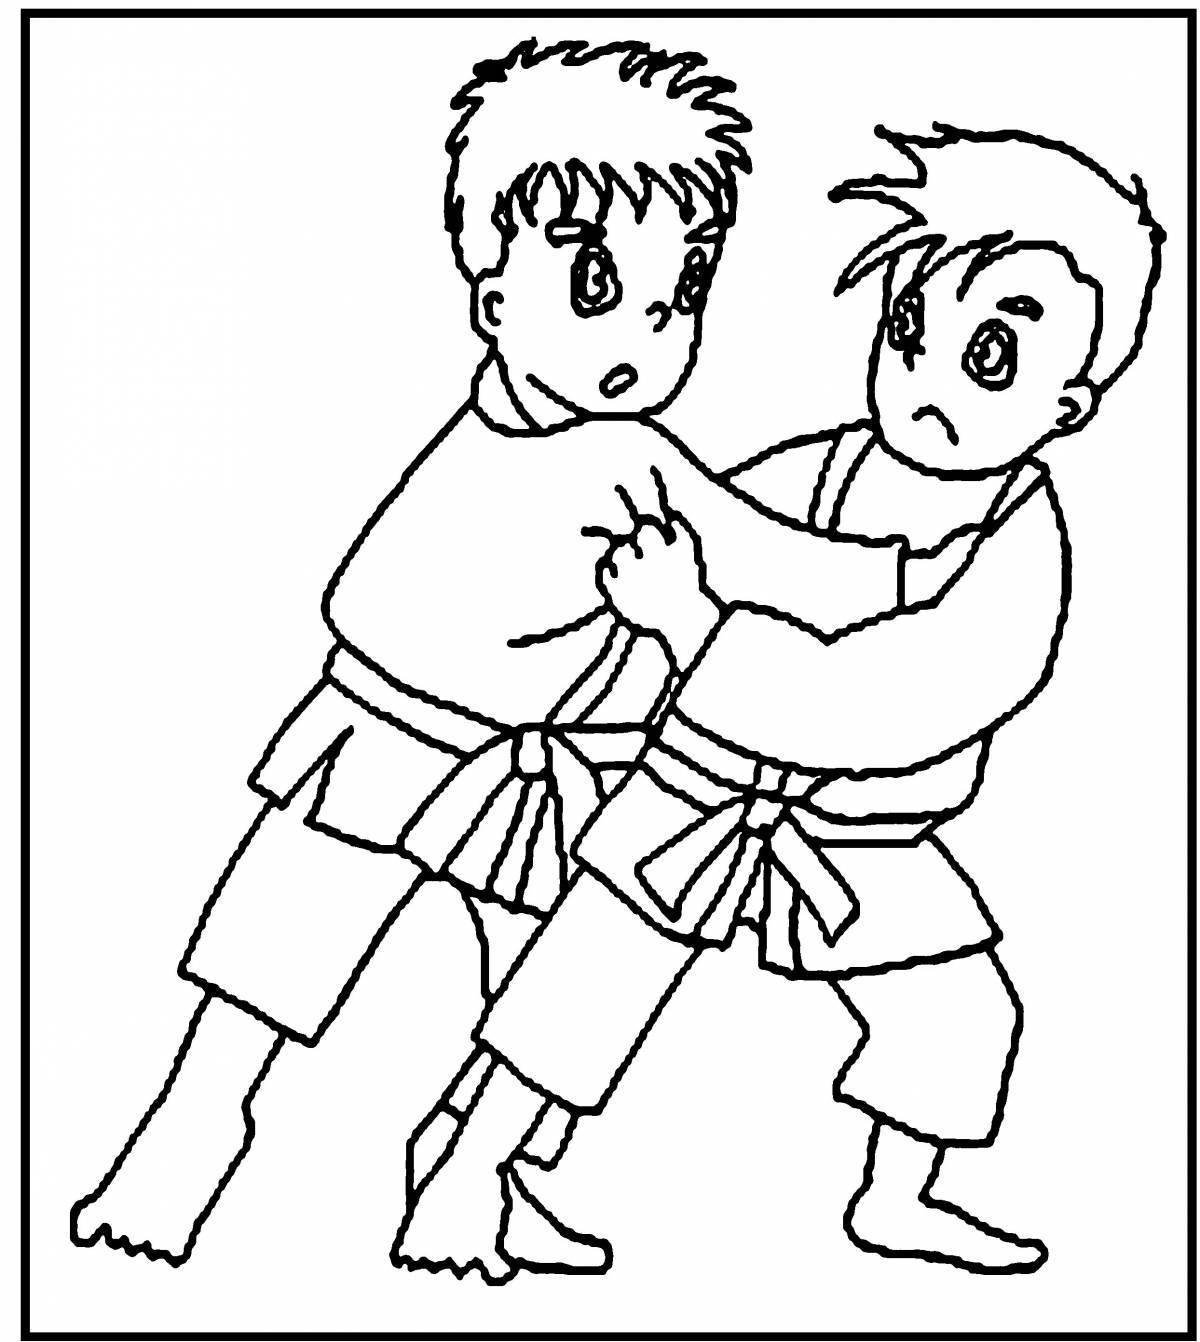 Exciting taekwondo coloring book